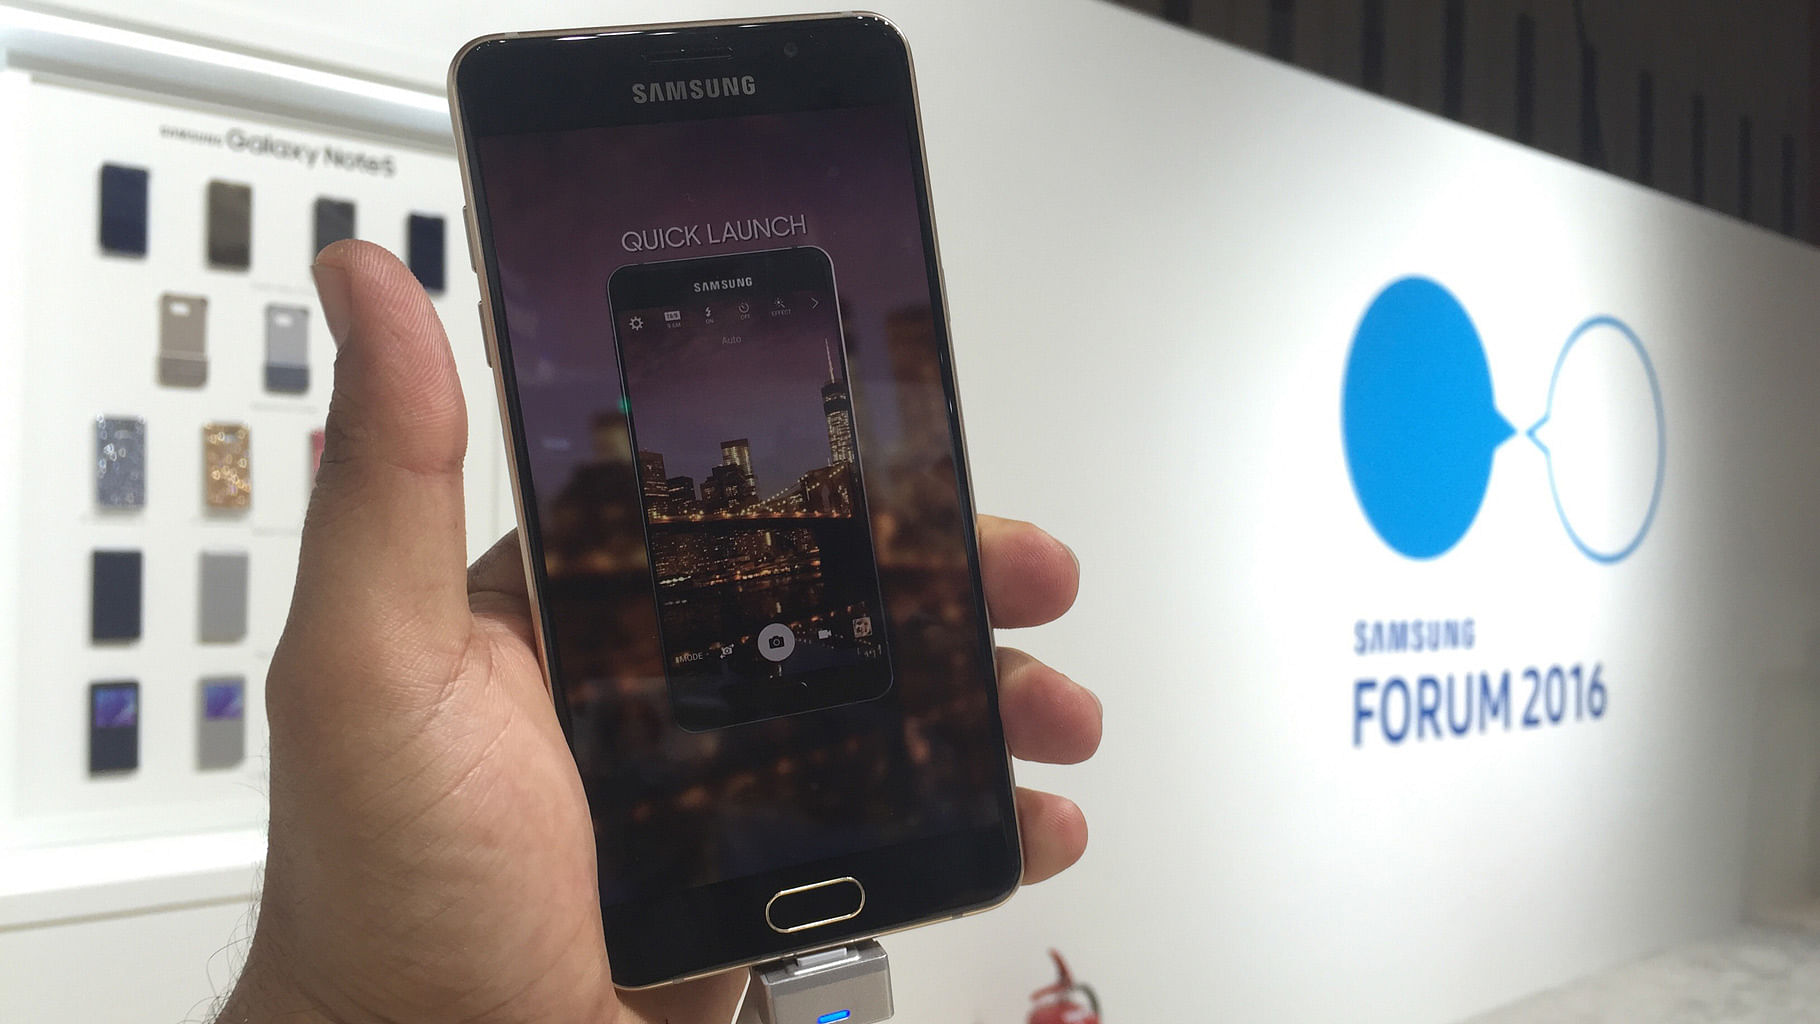 

Galaxy A5 launched at the Samsung Forum 2016. (Photo Courtesy: Siddhartha Sharma)